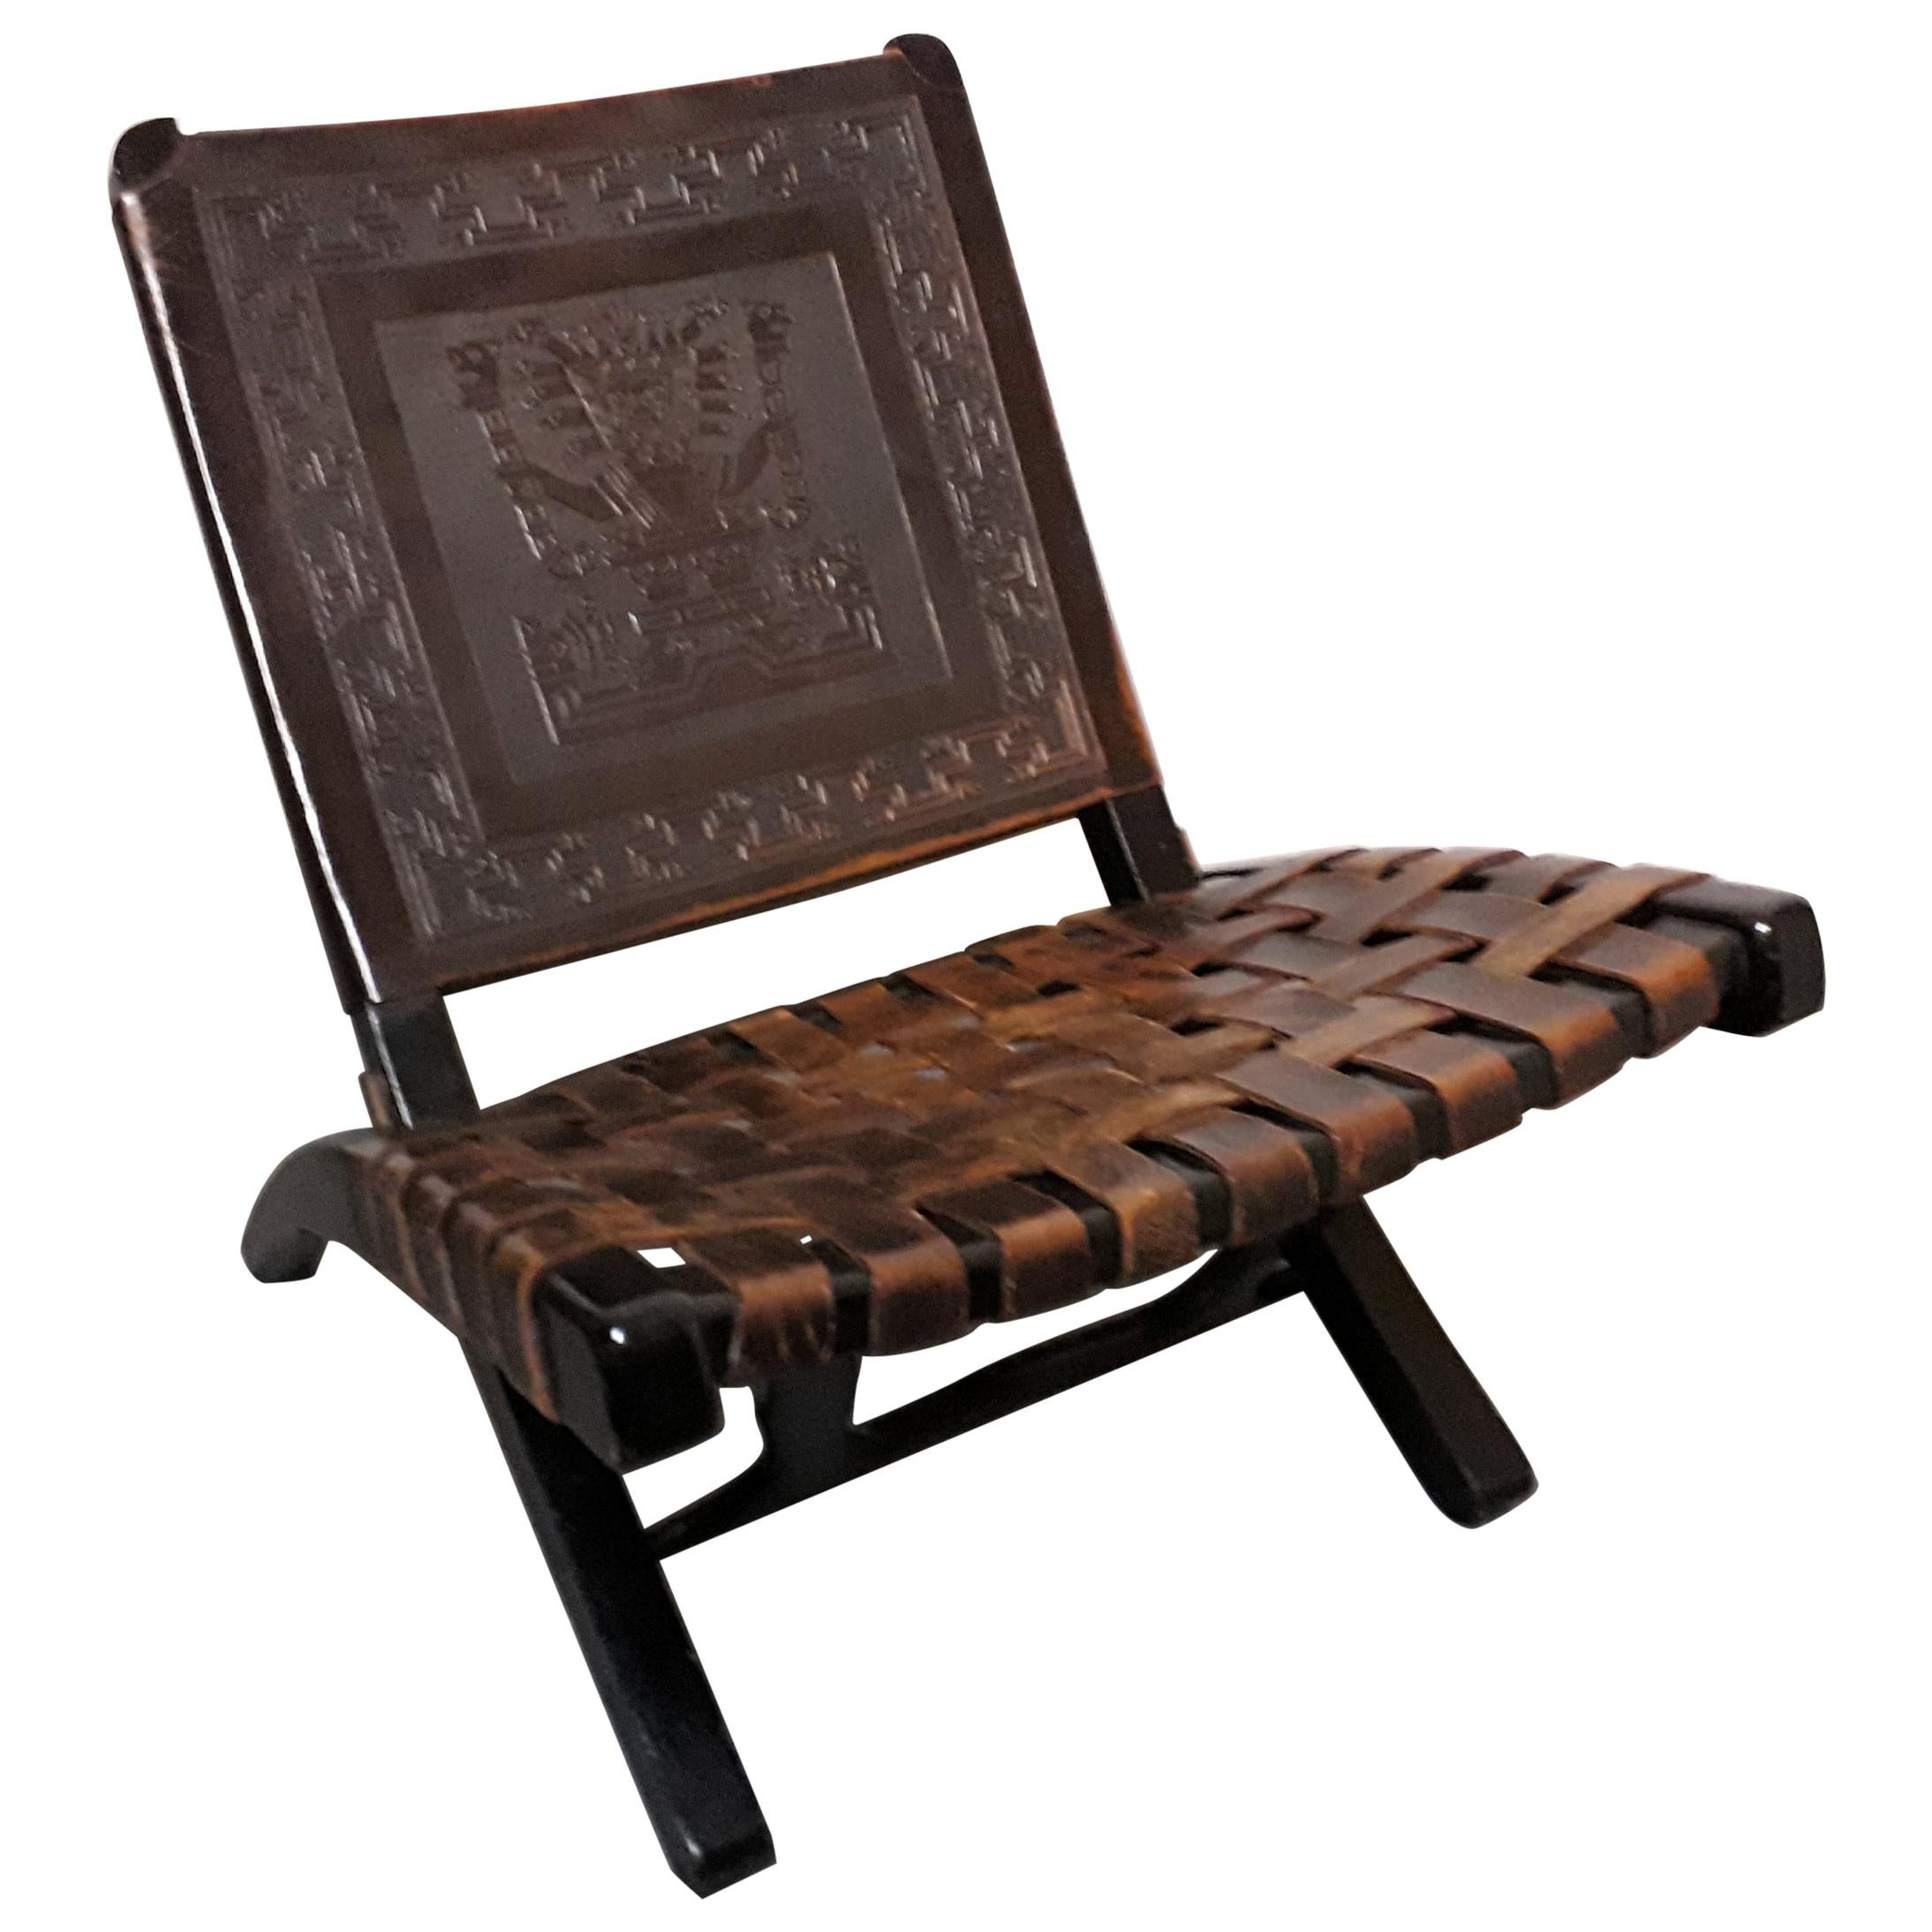 Peruvian Folding Chair